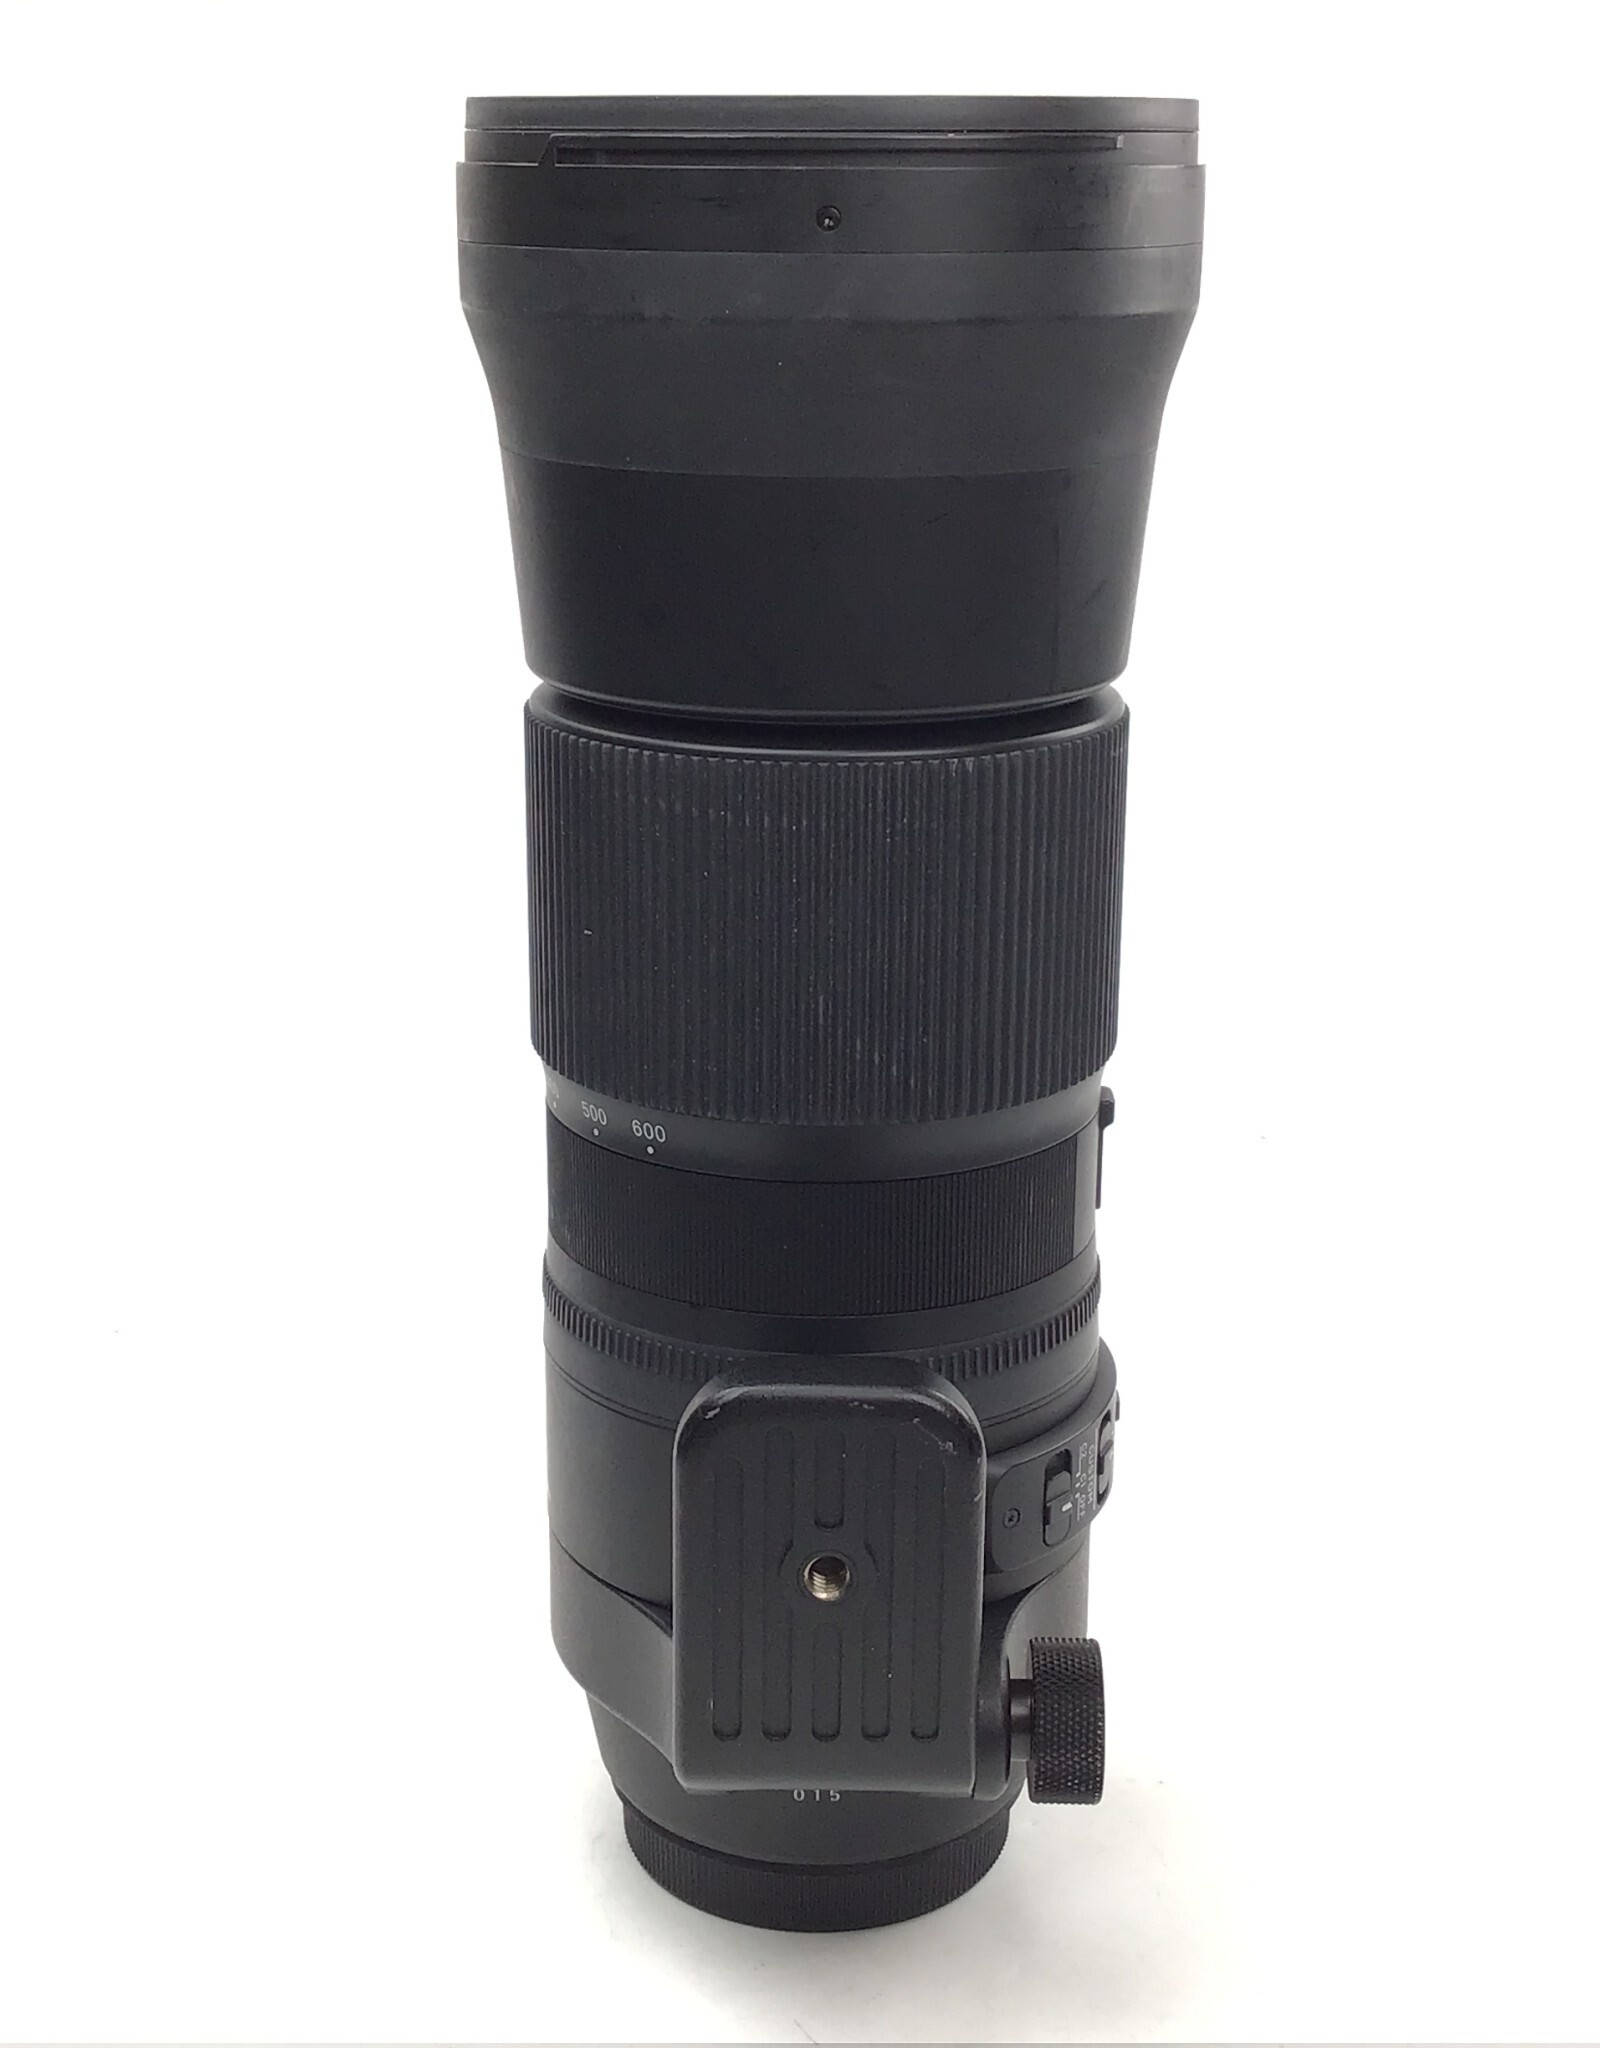 CANON Sigma 150-600mm f5-6.3 DG Contemporary Lens for Canon in Box Used Good